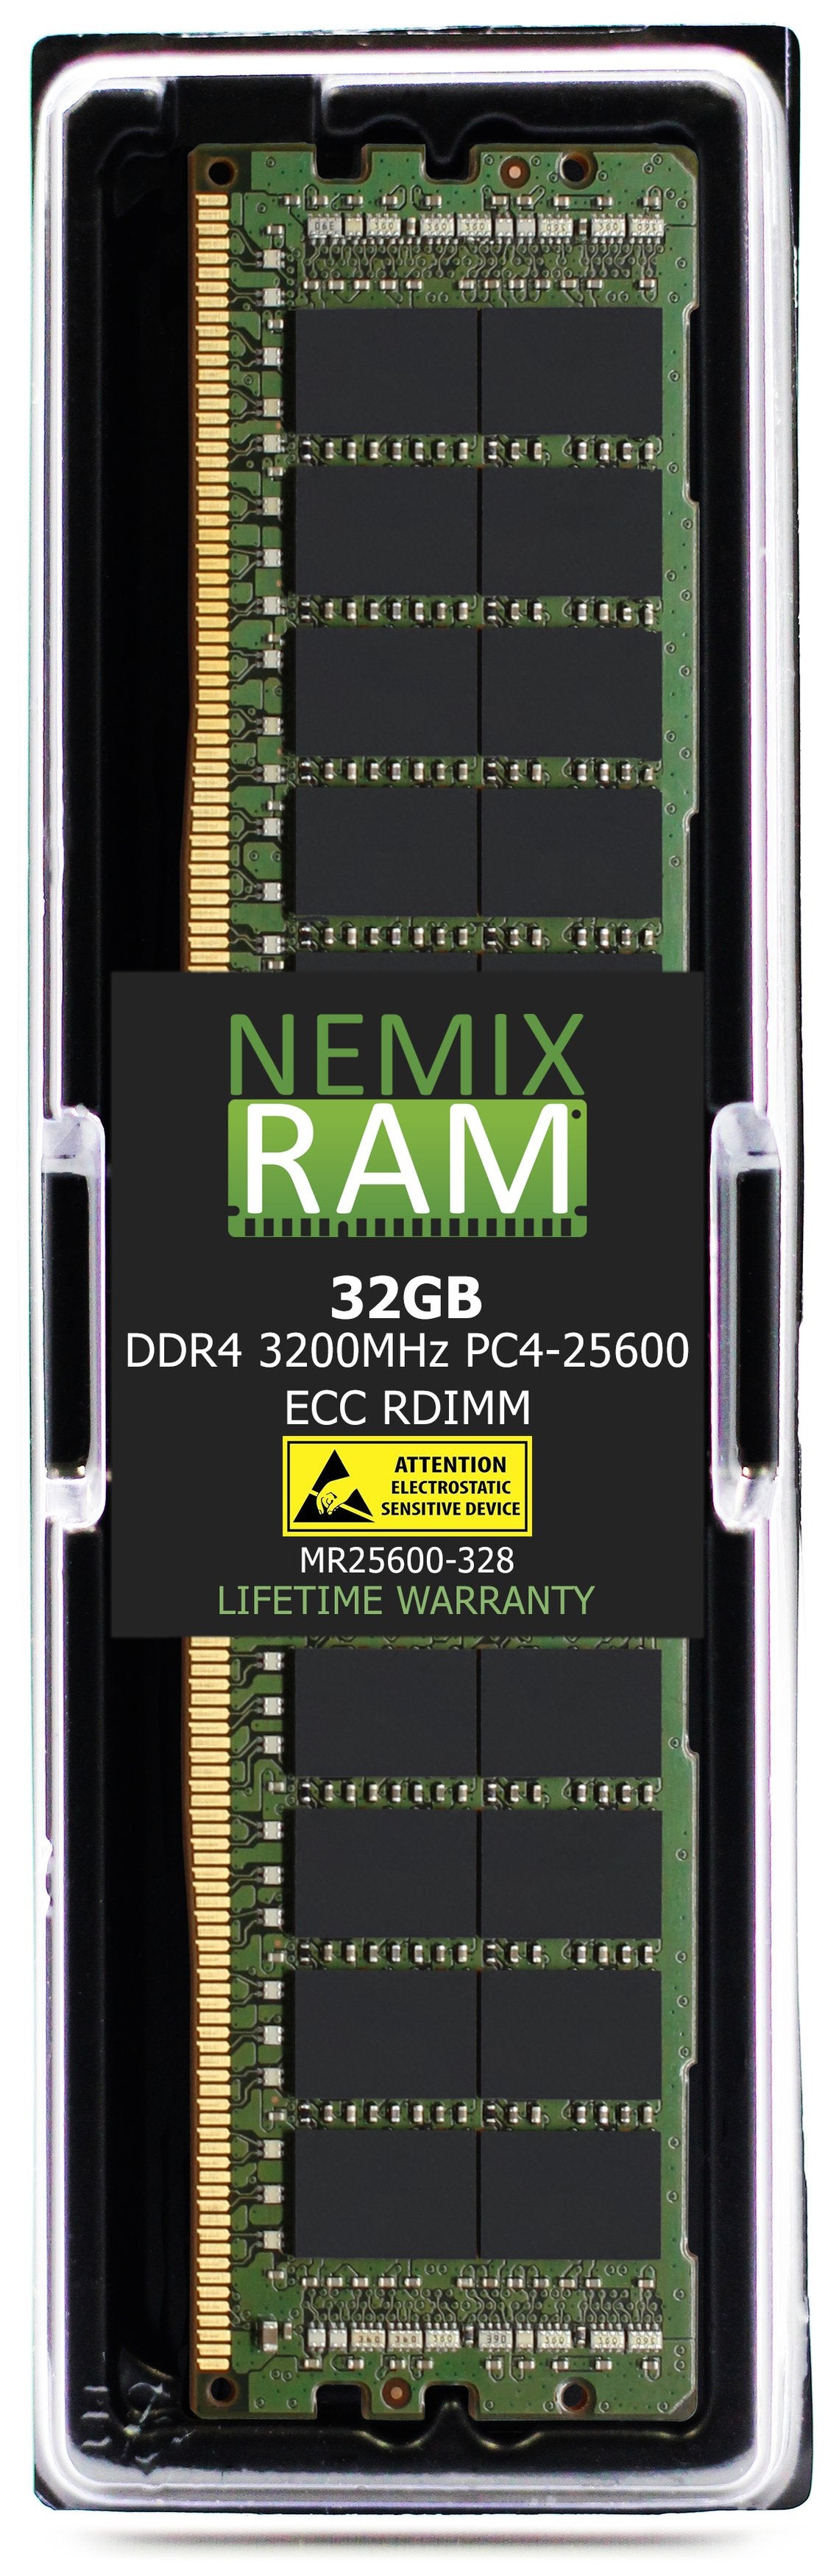 32GB DDR4 3200MHZ PC4-25600 RDIMM Compatible with Supermicro MEM-DR432L-HL03-ER32